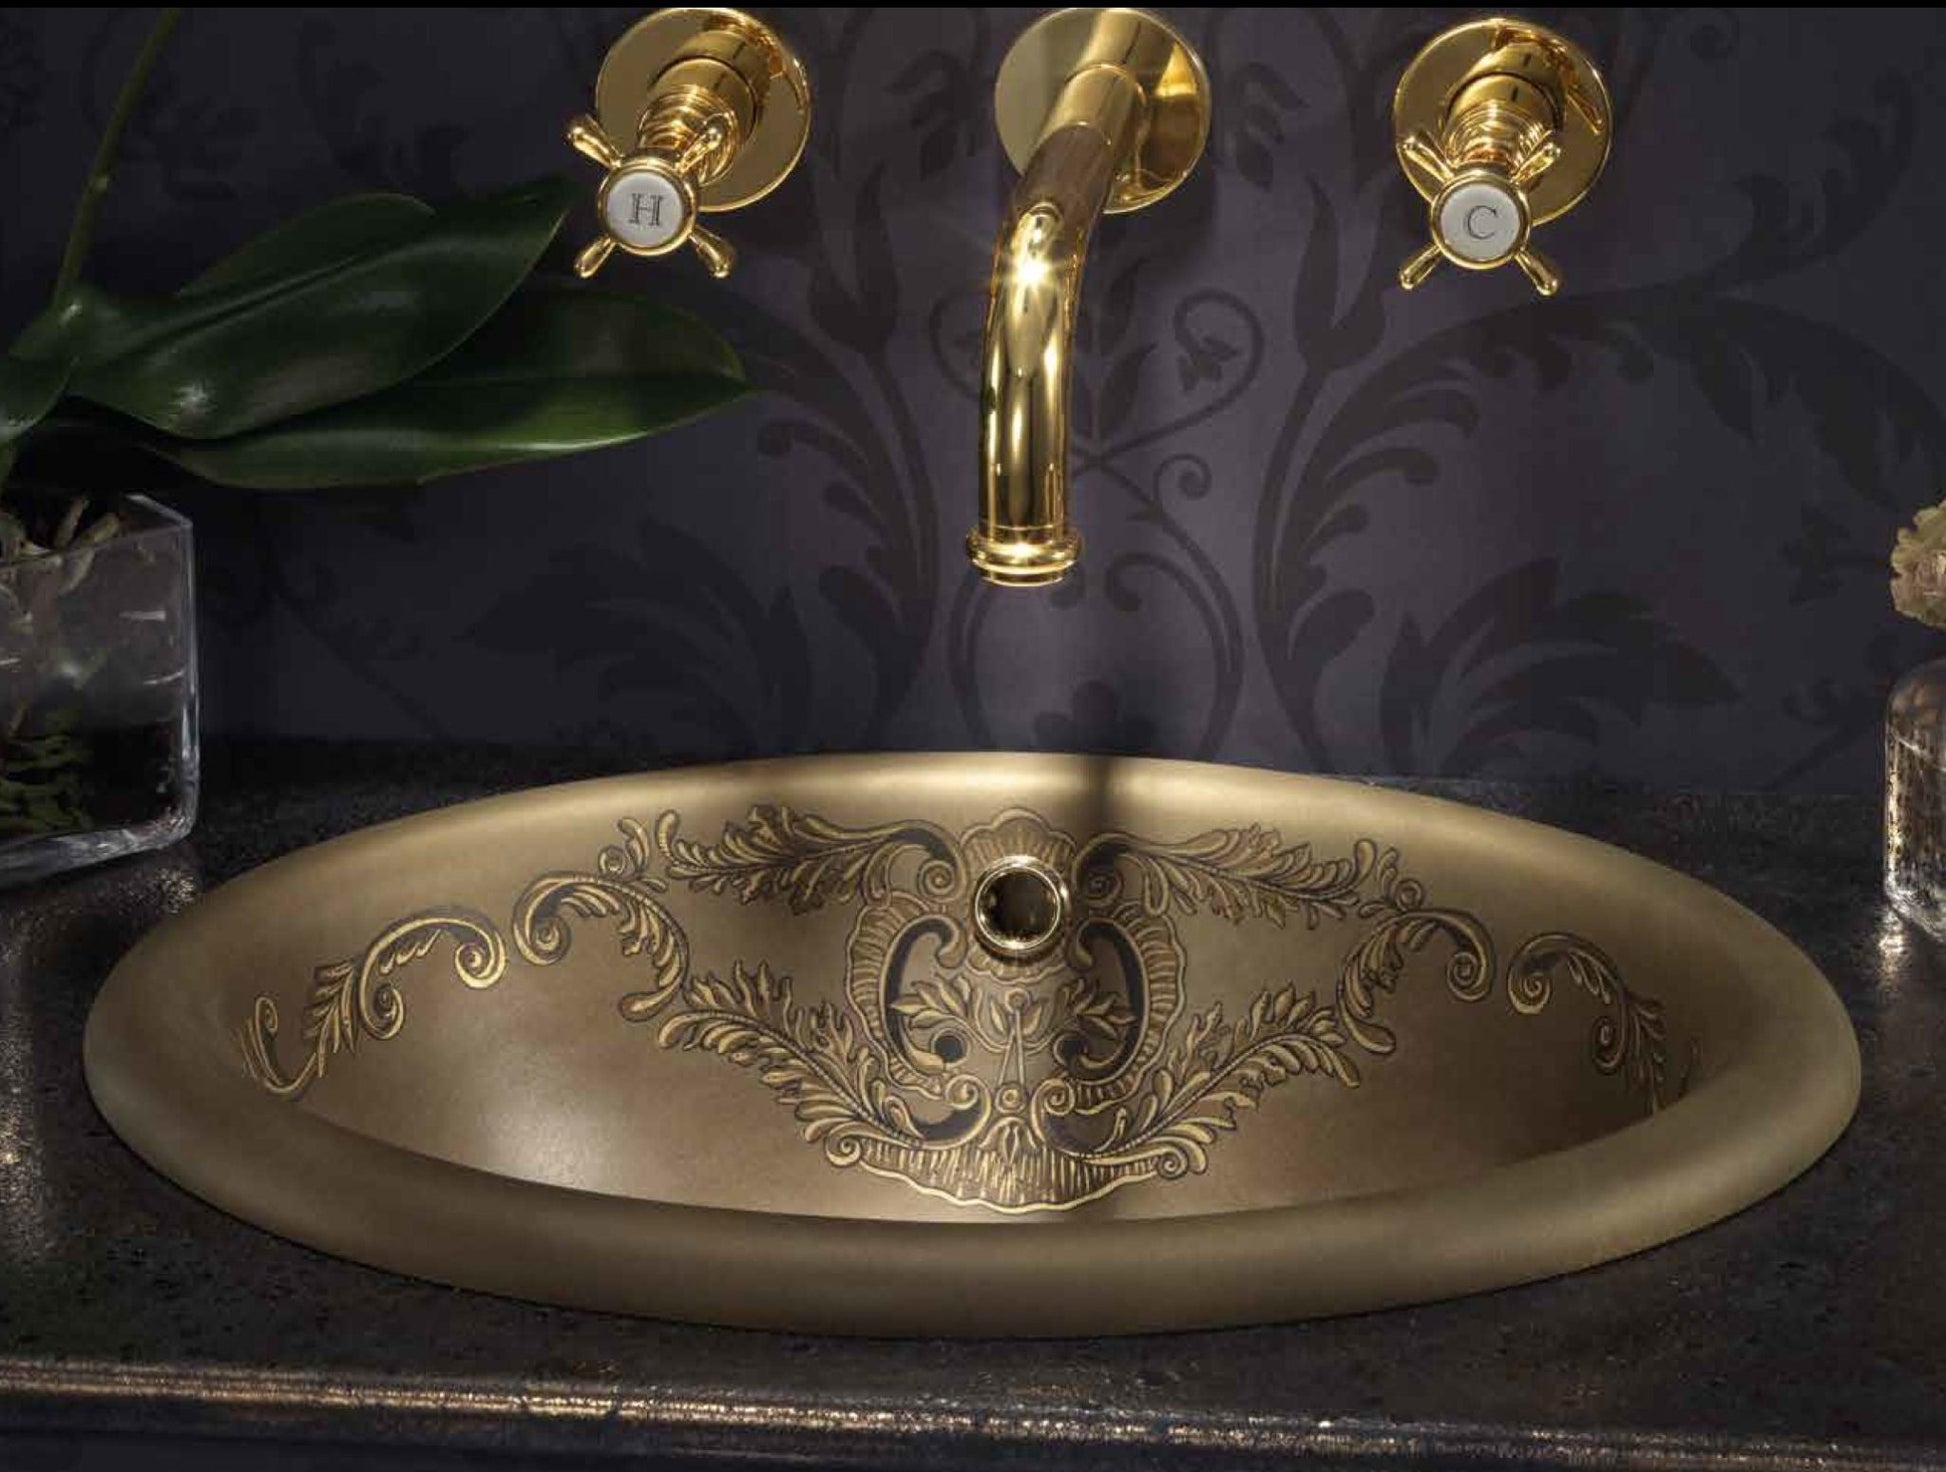 Luxury Brown Hand Painted Bronze Terzofoco Fireclay Bathroom Sink - |VESIMI Design| Luxury and Rustic bathrooms online